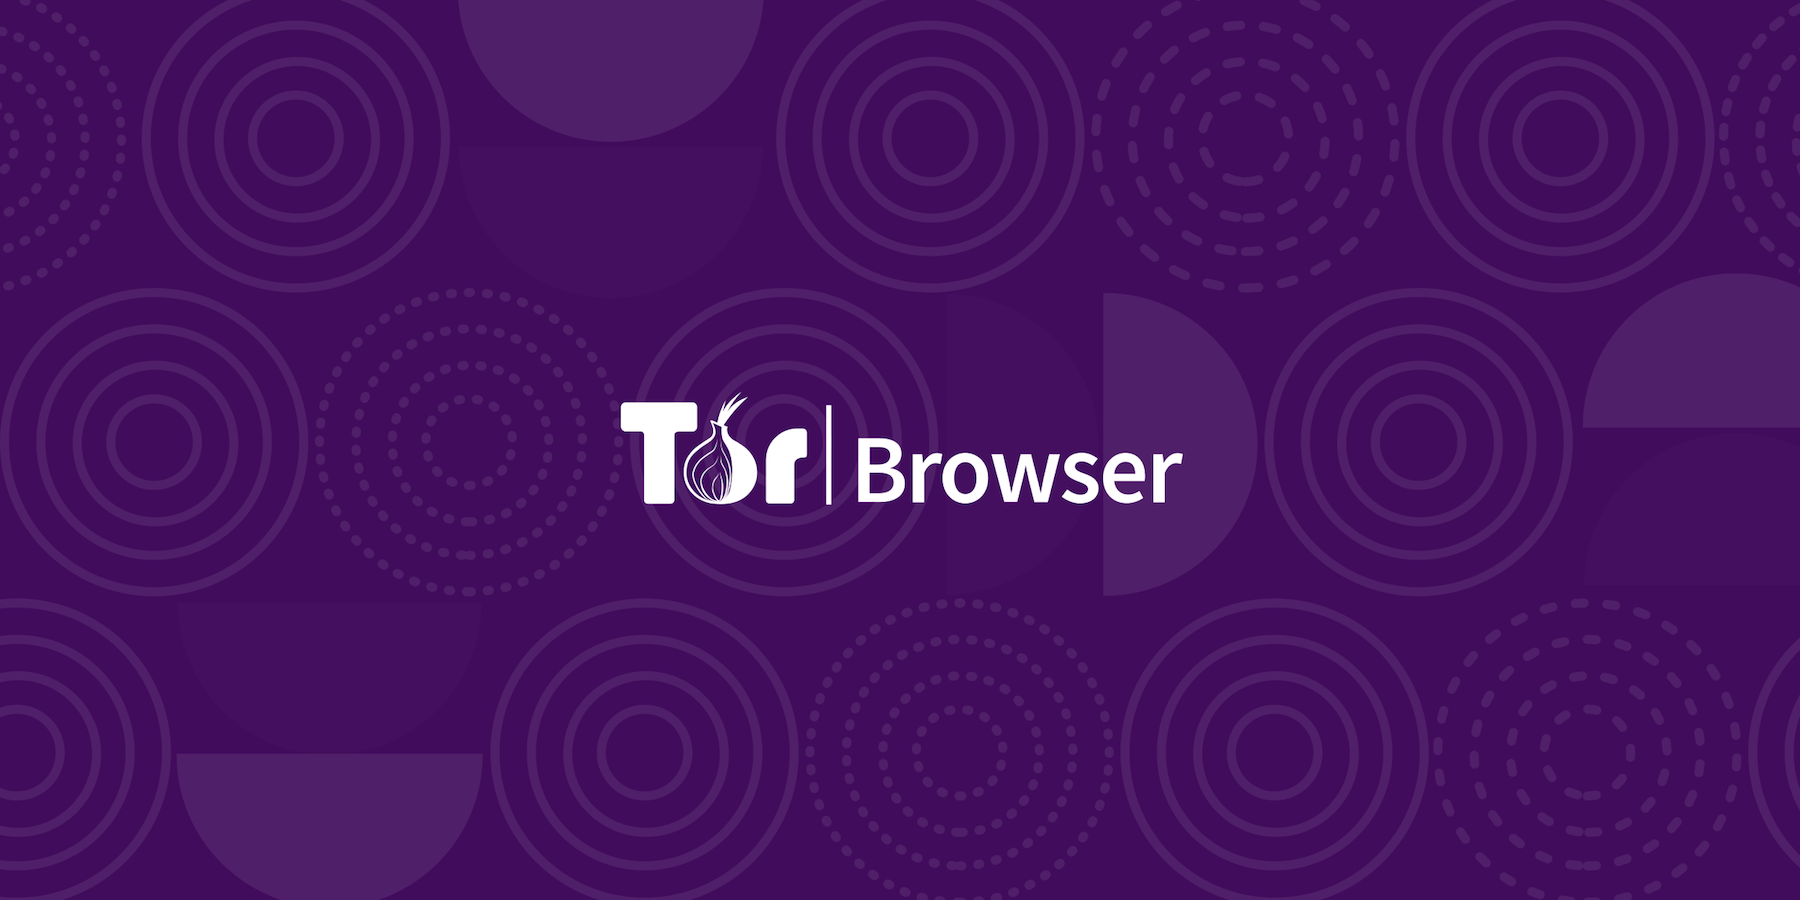 Tor browser for android devices hyrda скачать тор браузер для ios гирда